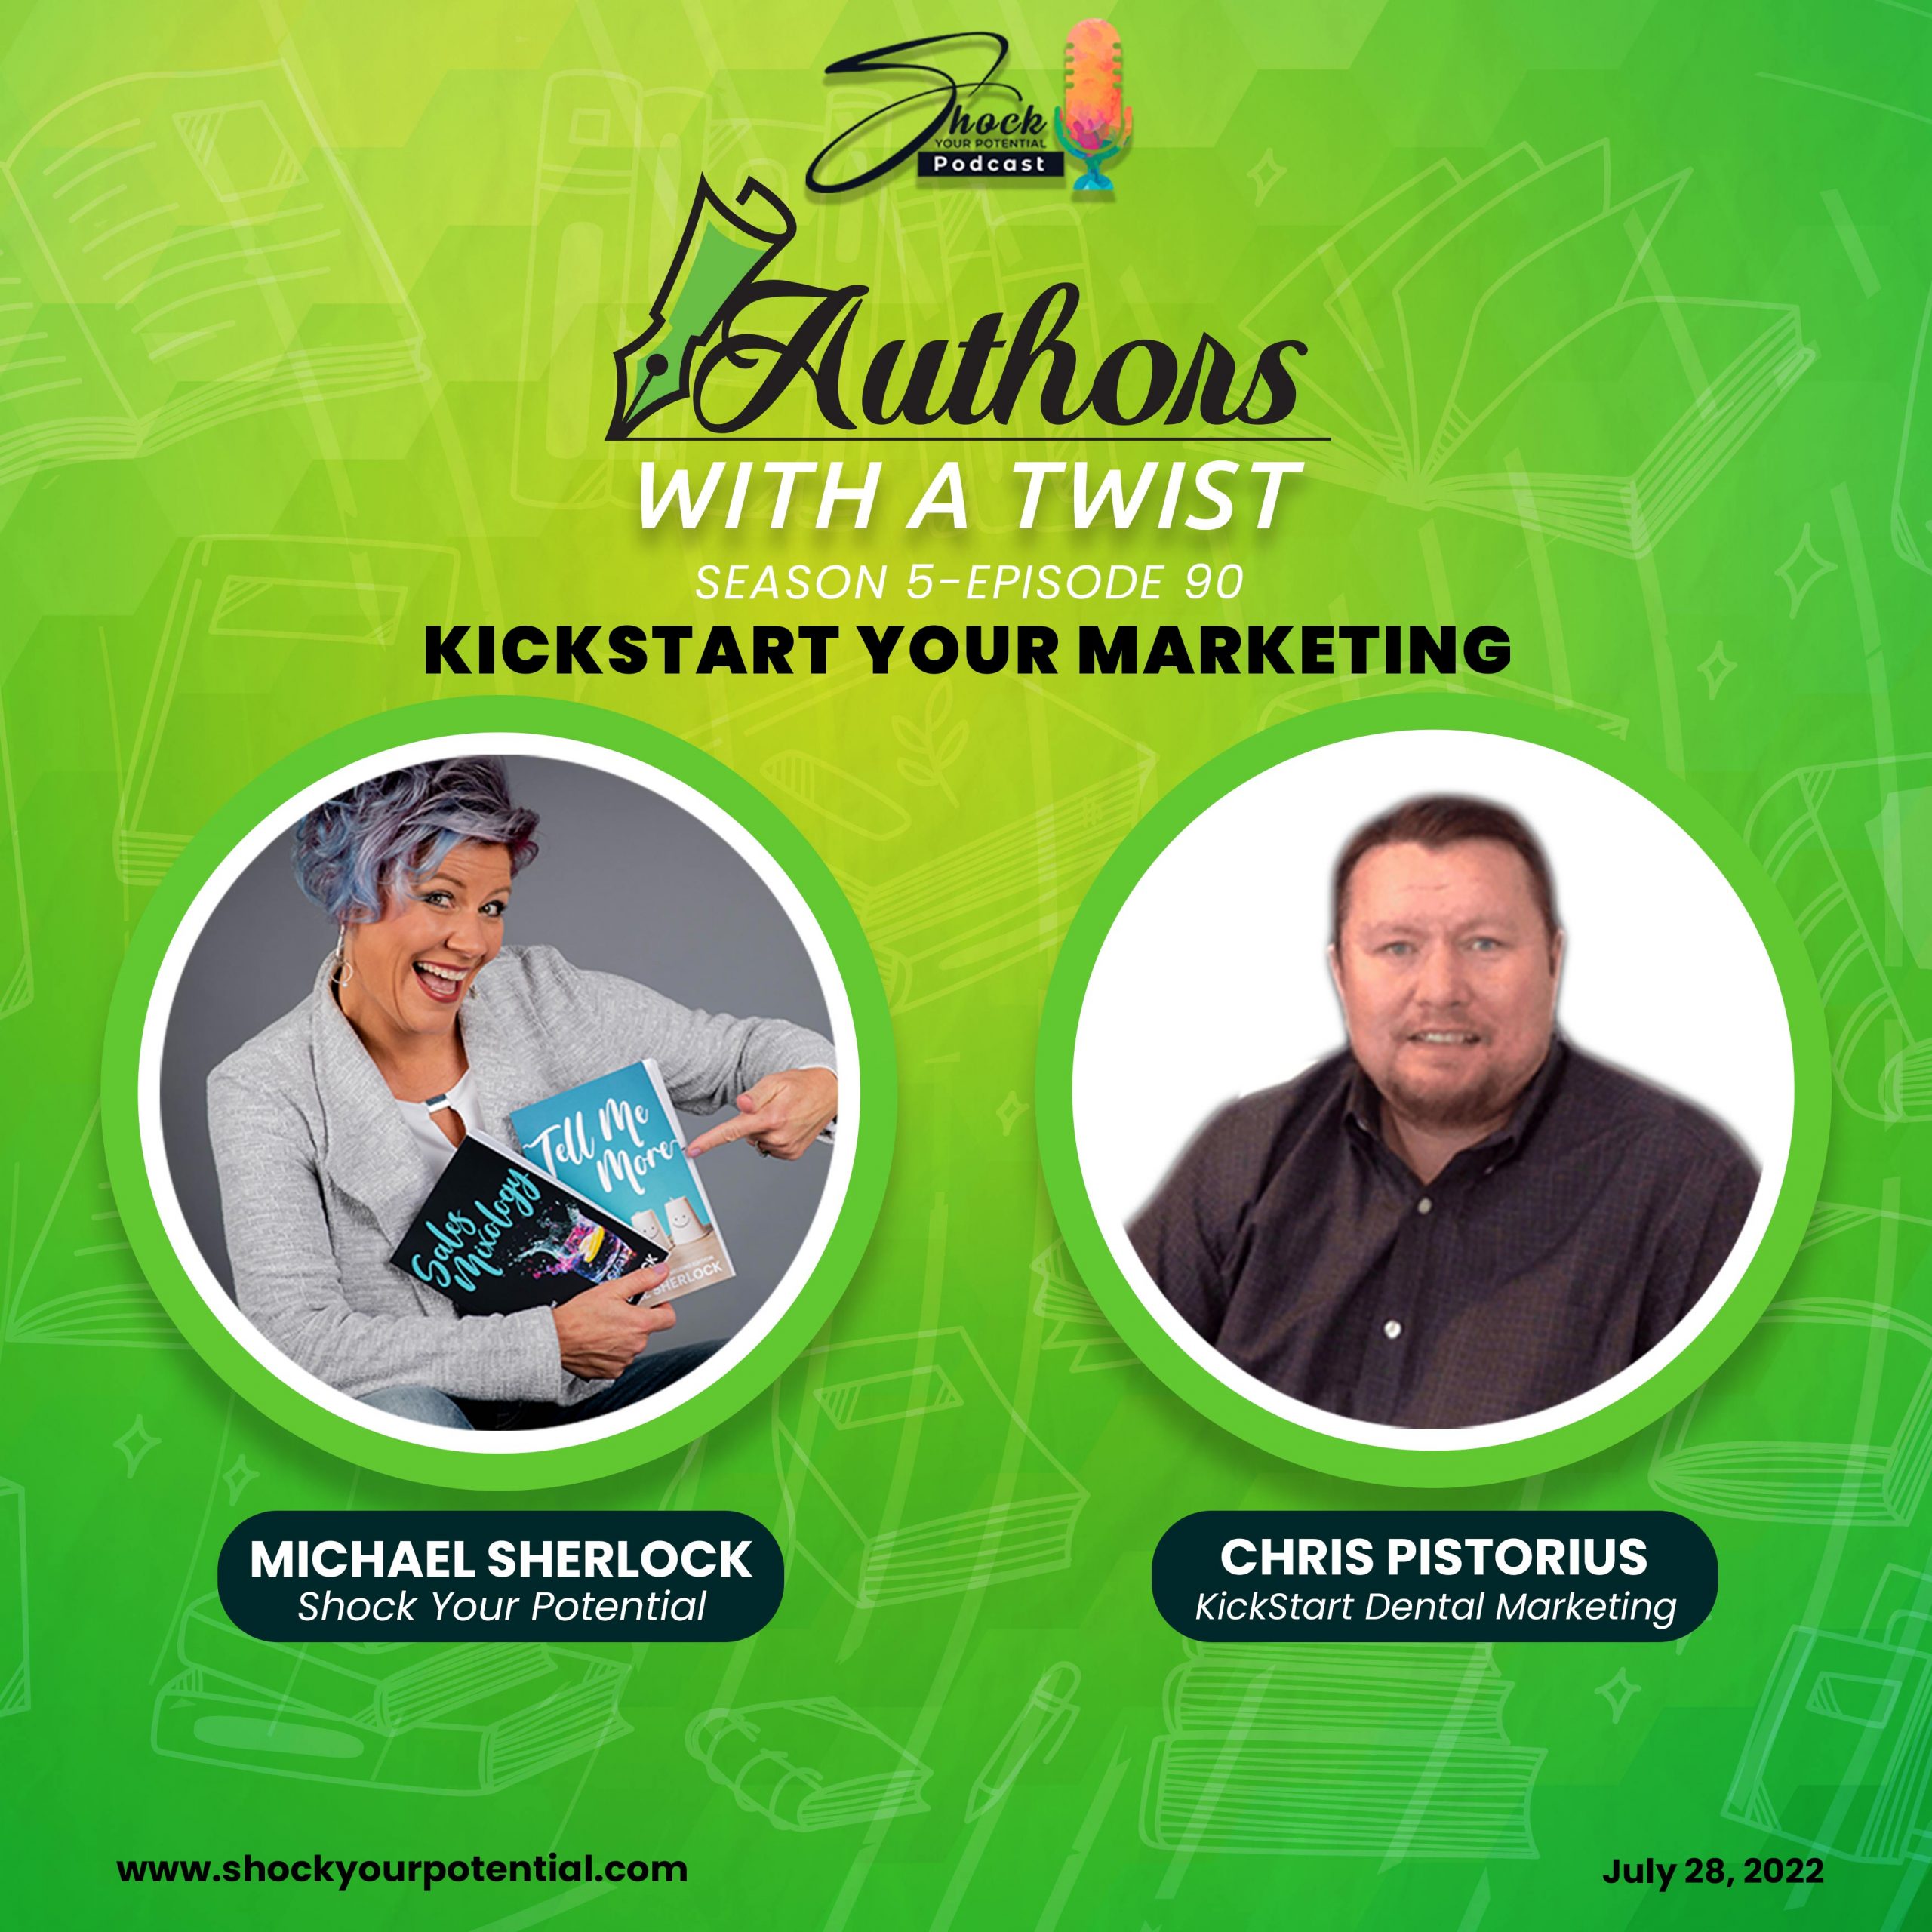 Kick Start Your Marketing – Chris Pistorius